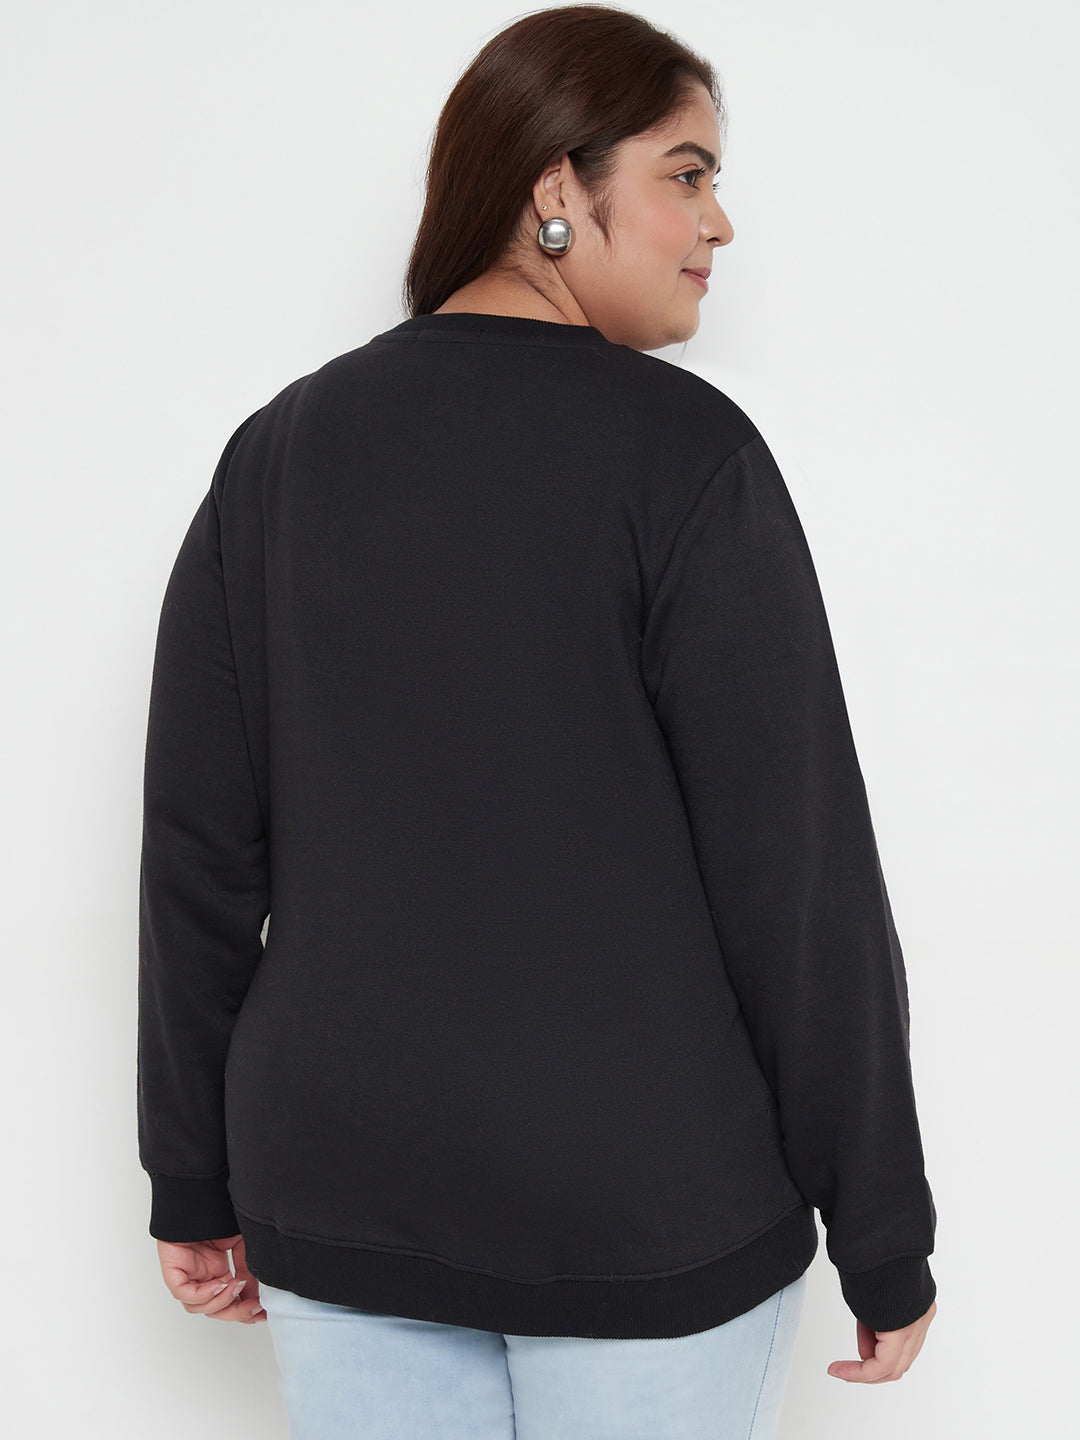 Austivo Women Solid Sweatshirt